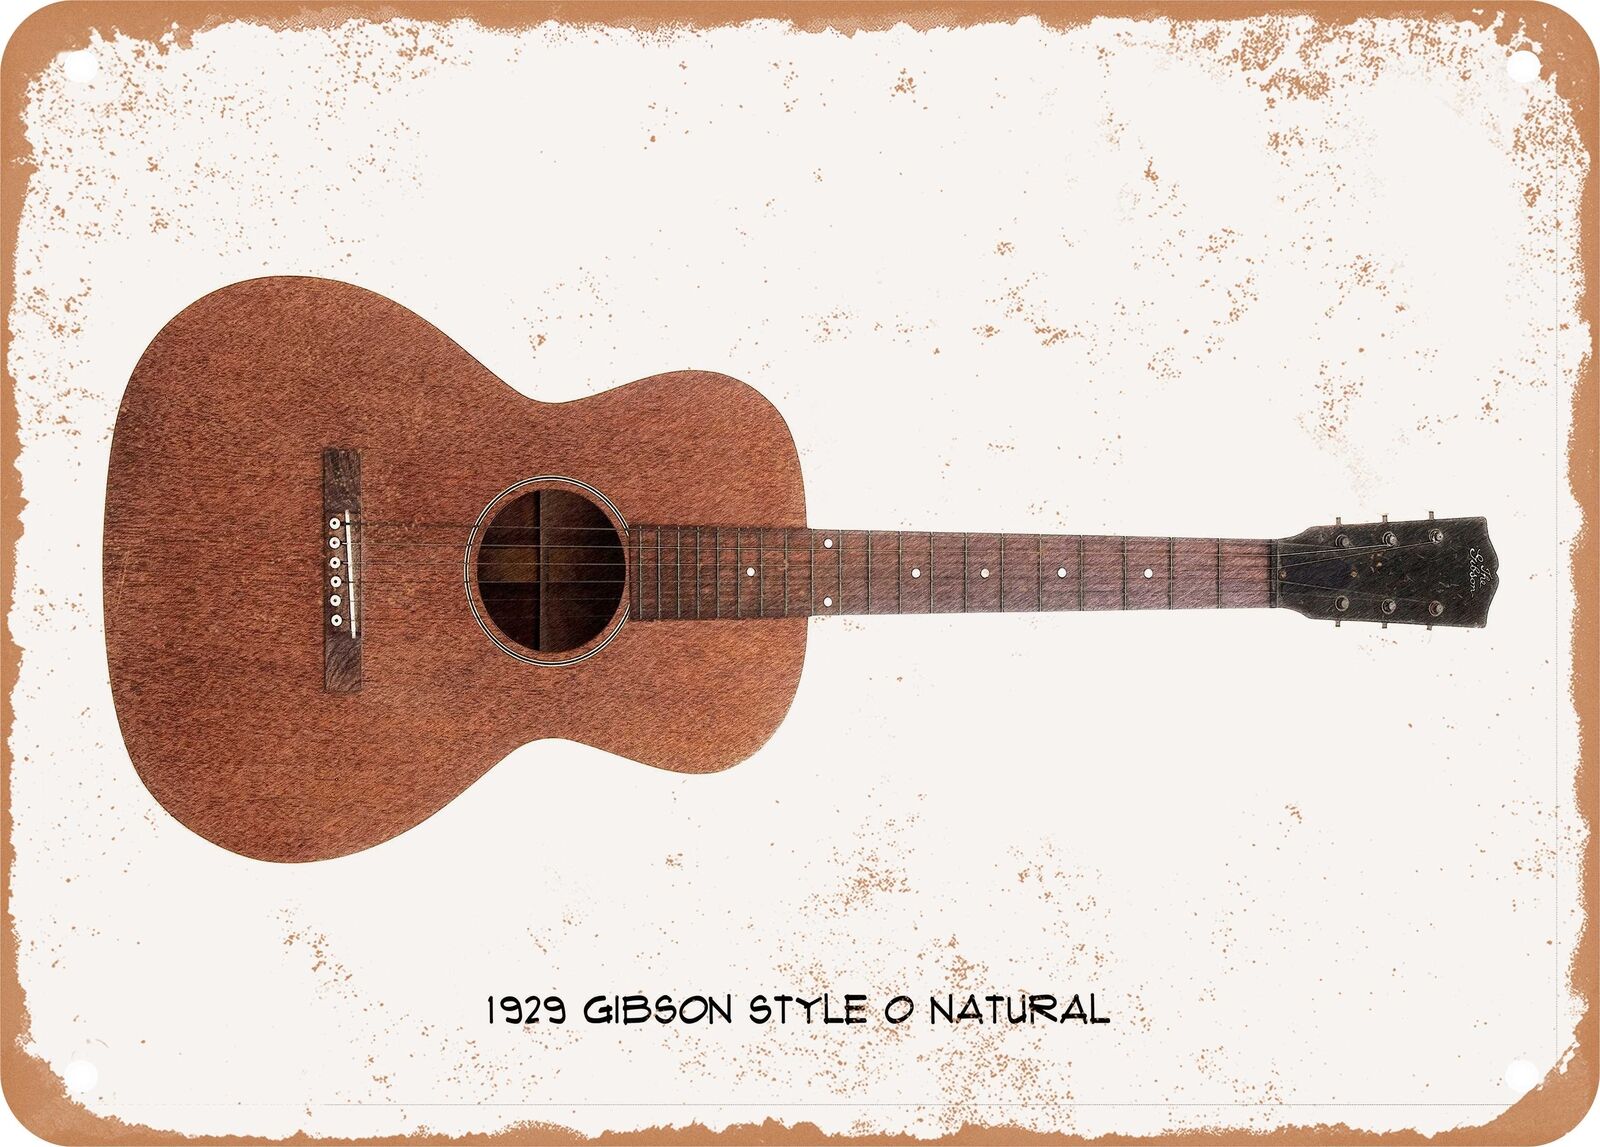 Guitar Art - 1929 Gibson Style O Natural Pencil Drawing - Rusty Look Metal Sign